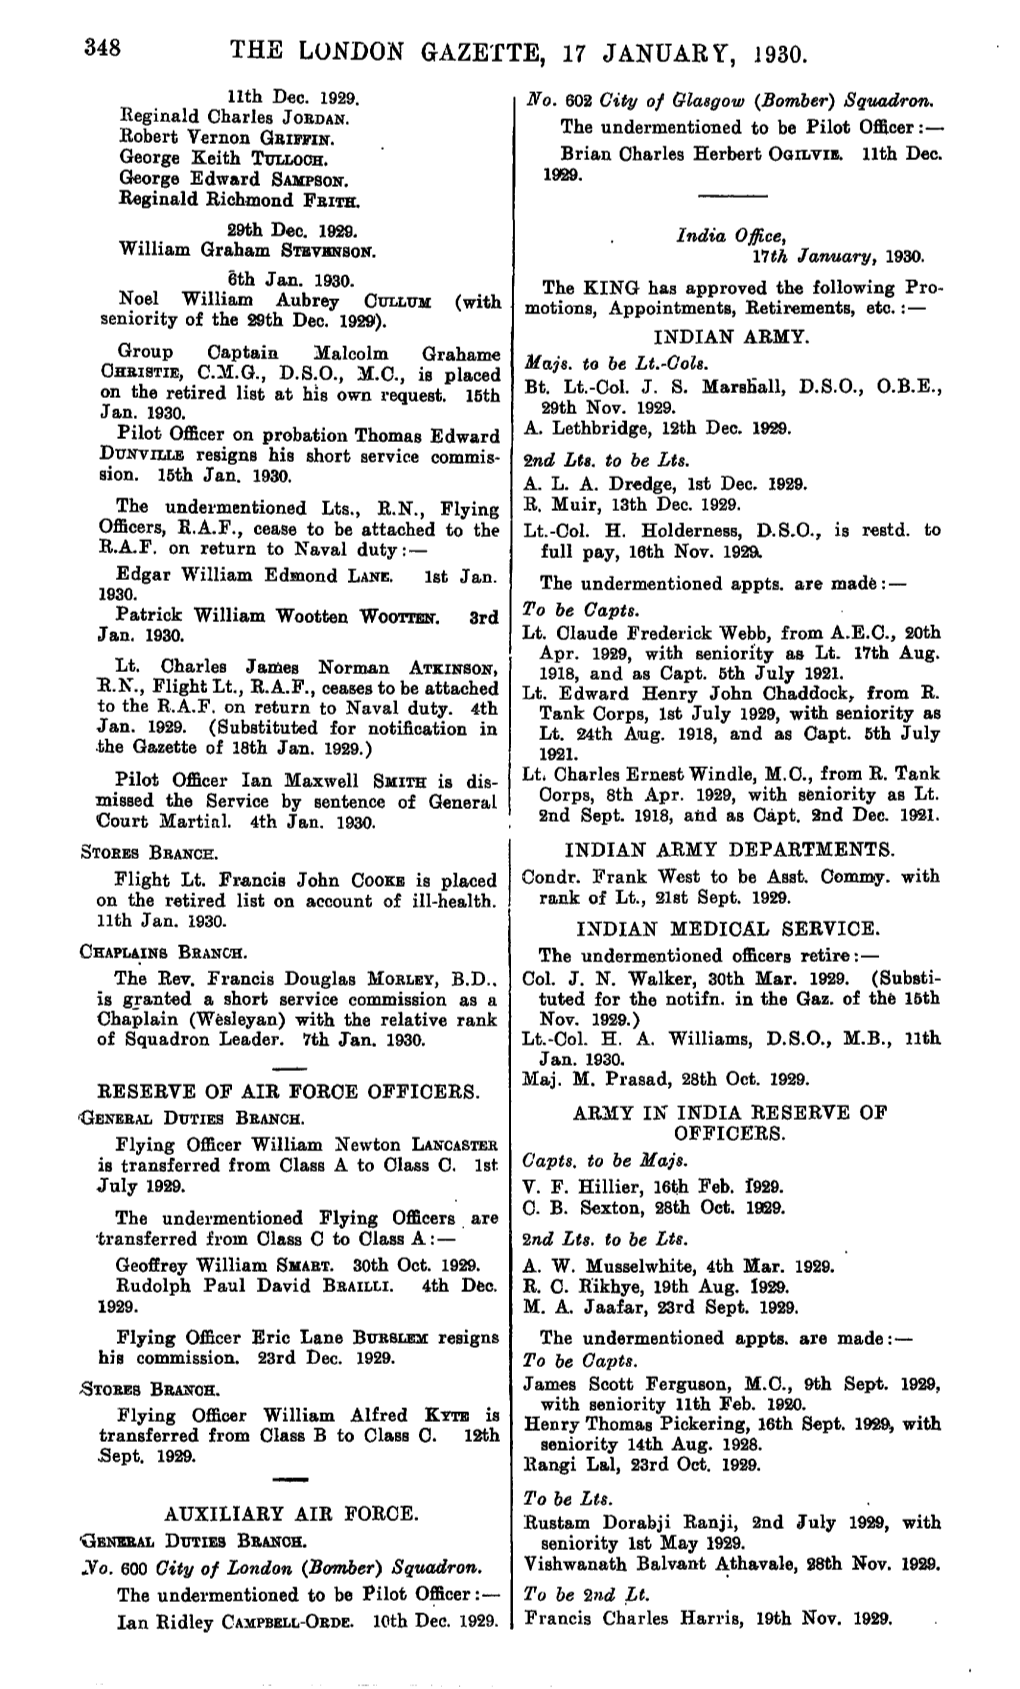 The Lojstdon Gazette, 17 January, 1930